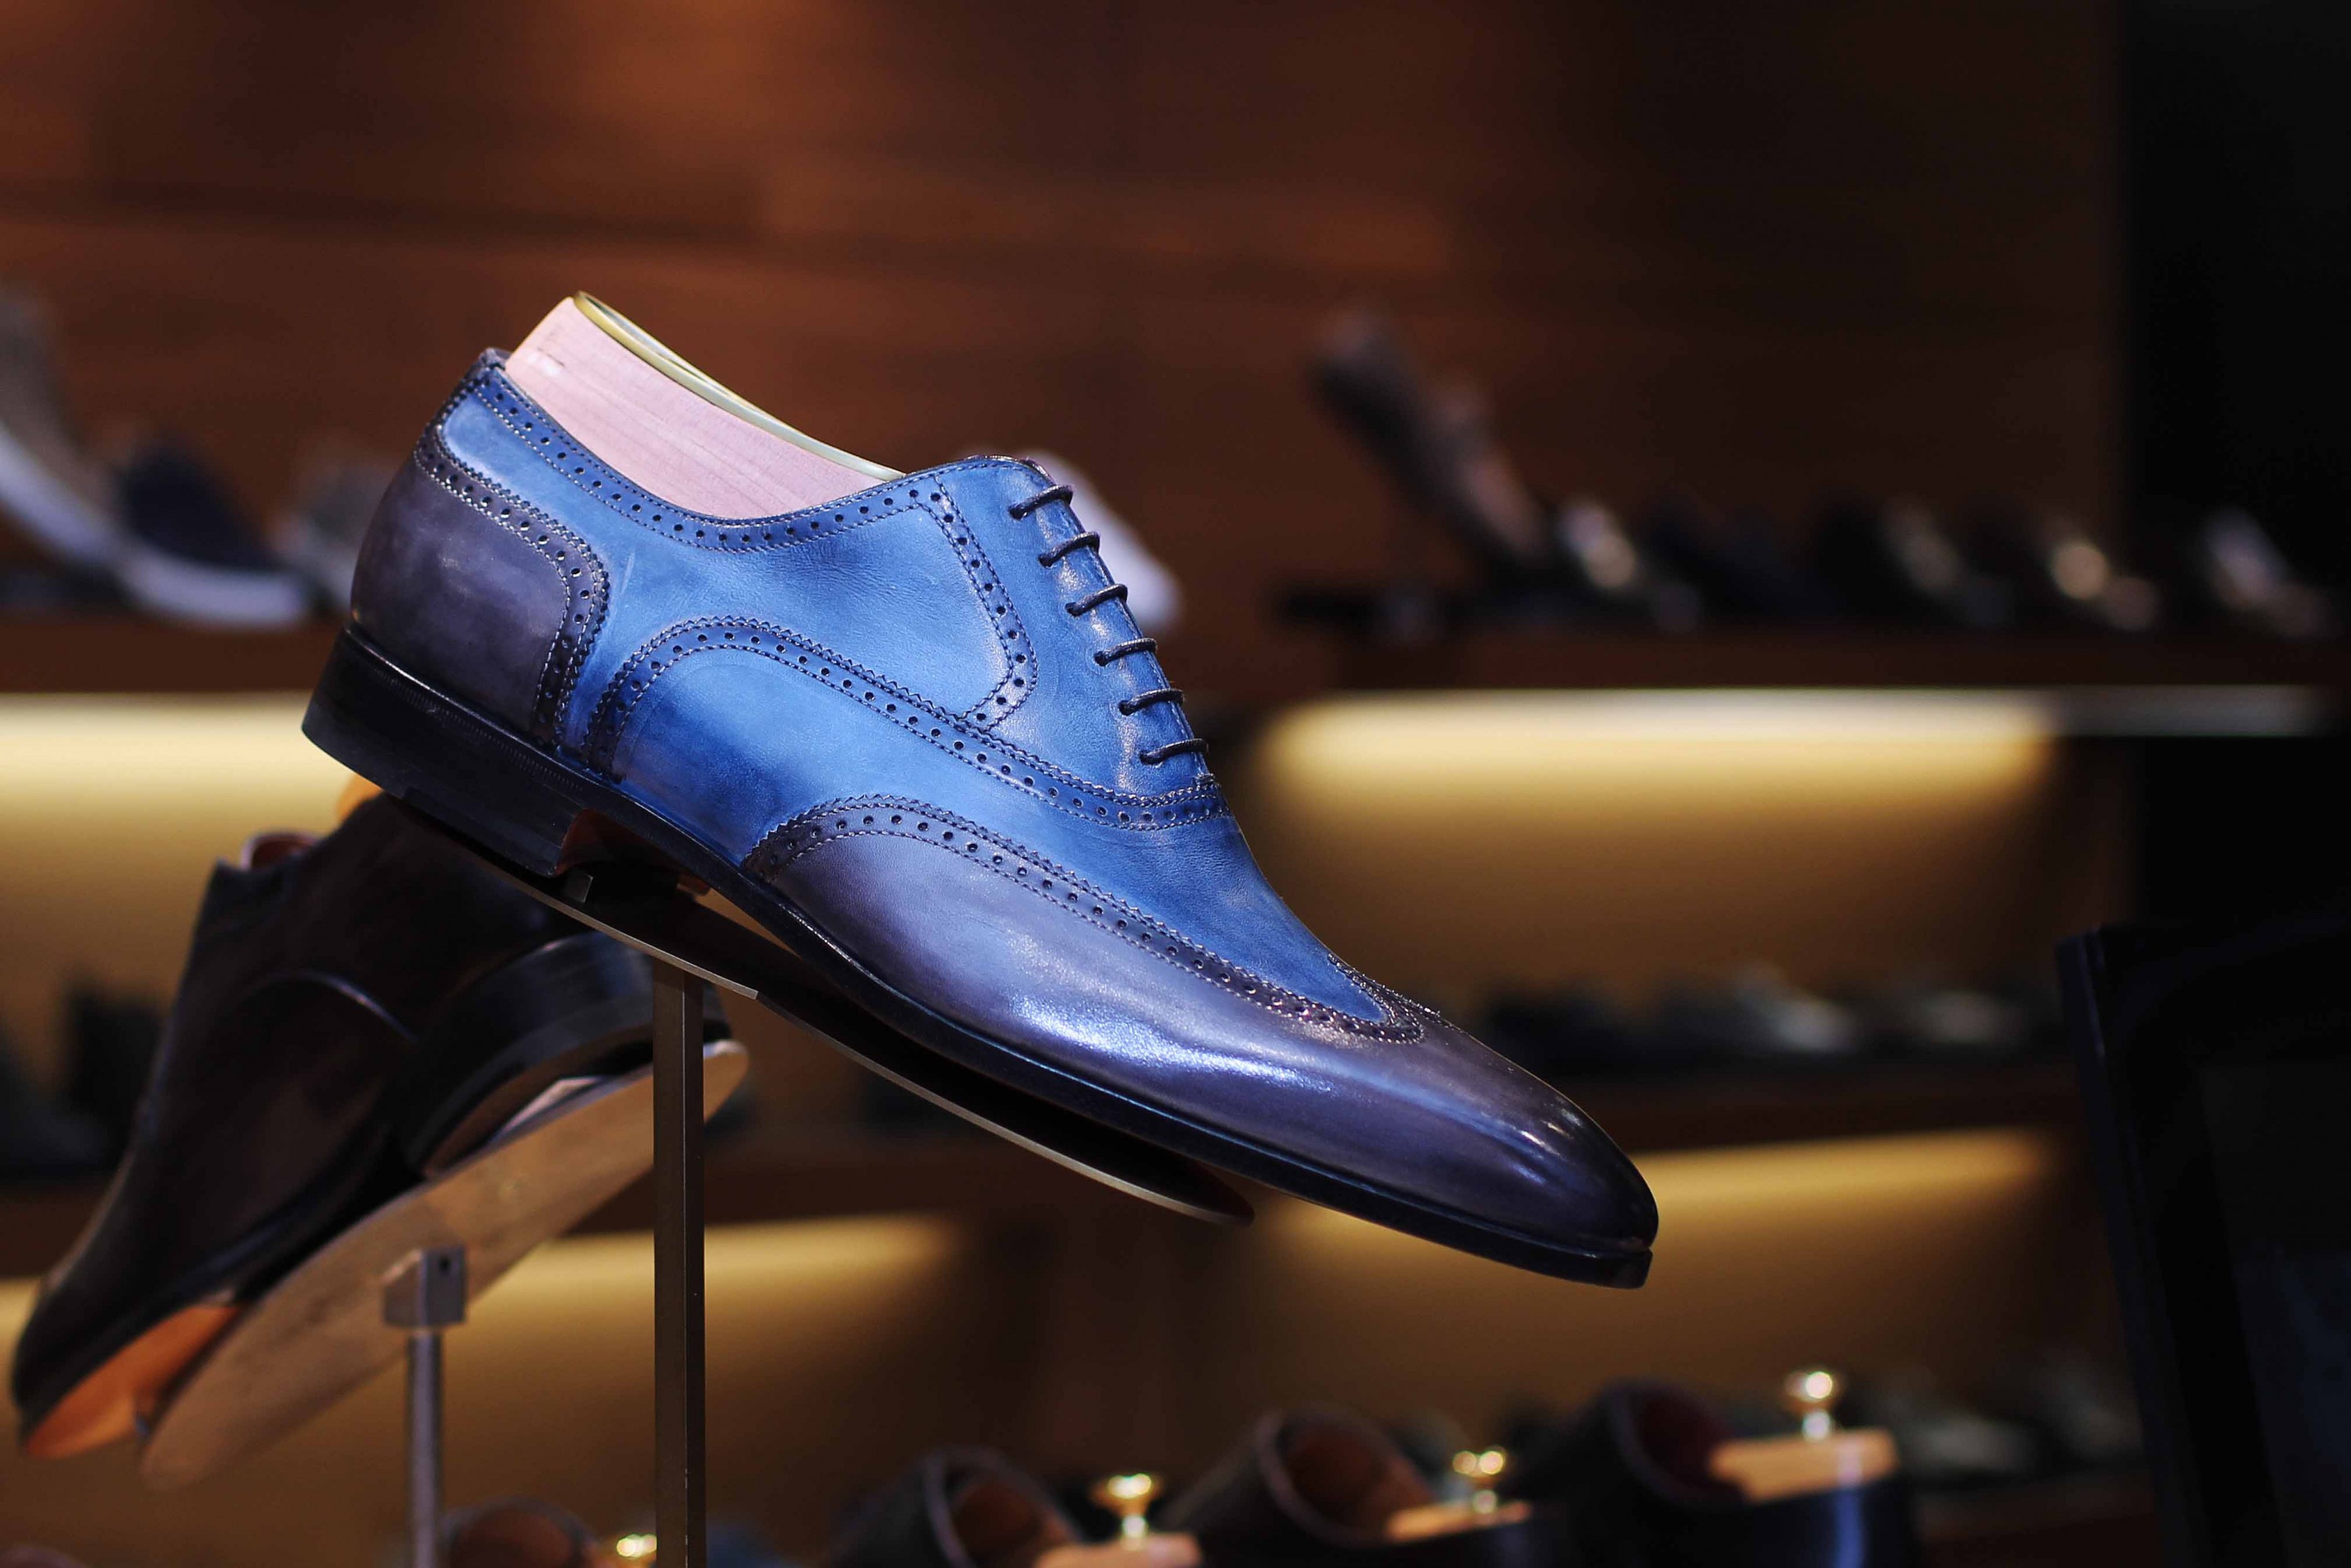 Santoni サントーニ 伝統と革新 が生む唯一無二の個性派靴をオーダーで イタリア本国の職人が来店し製作実演も Event 伊勢丹新宿店メンズ館 公式メディア Isetan Men S Net